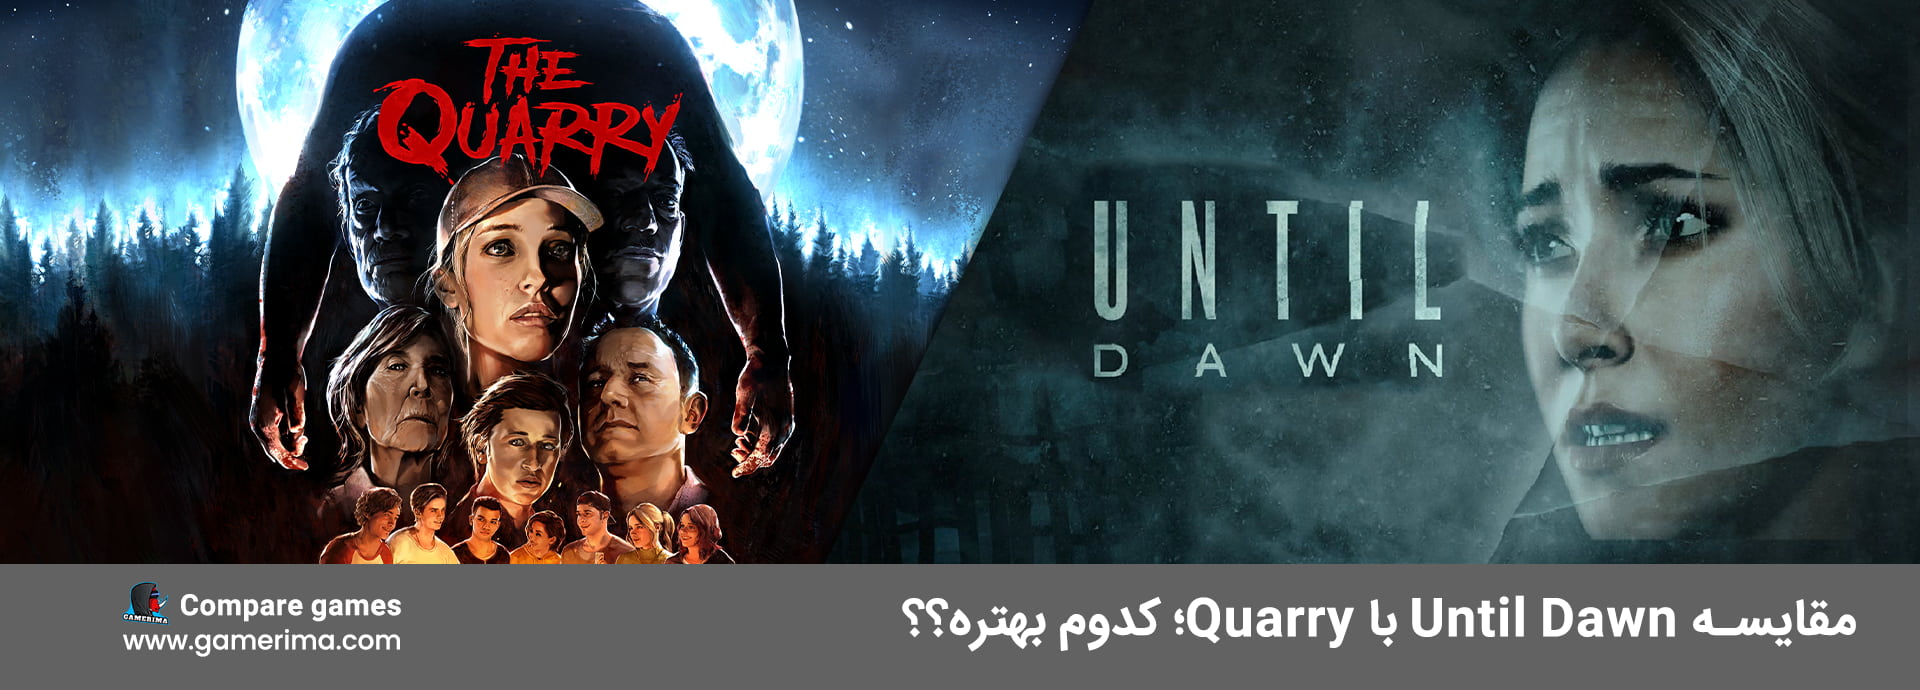 Until Dawn VS The Quarry